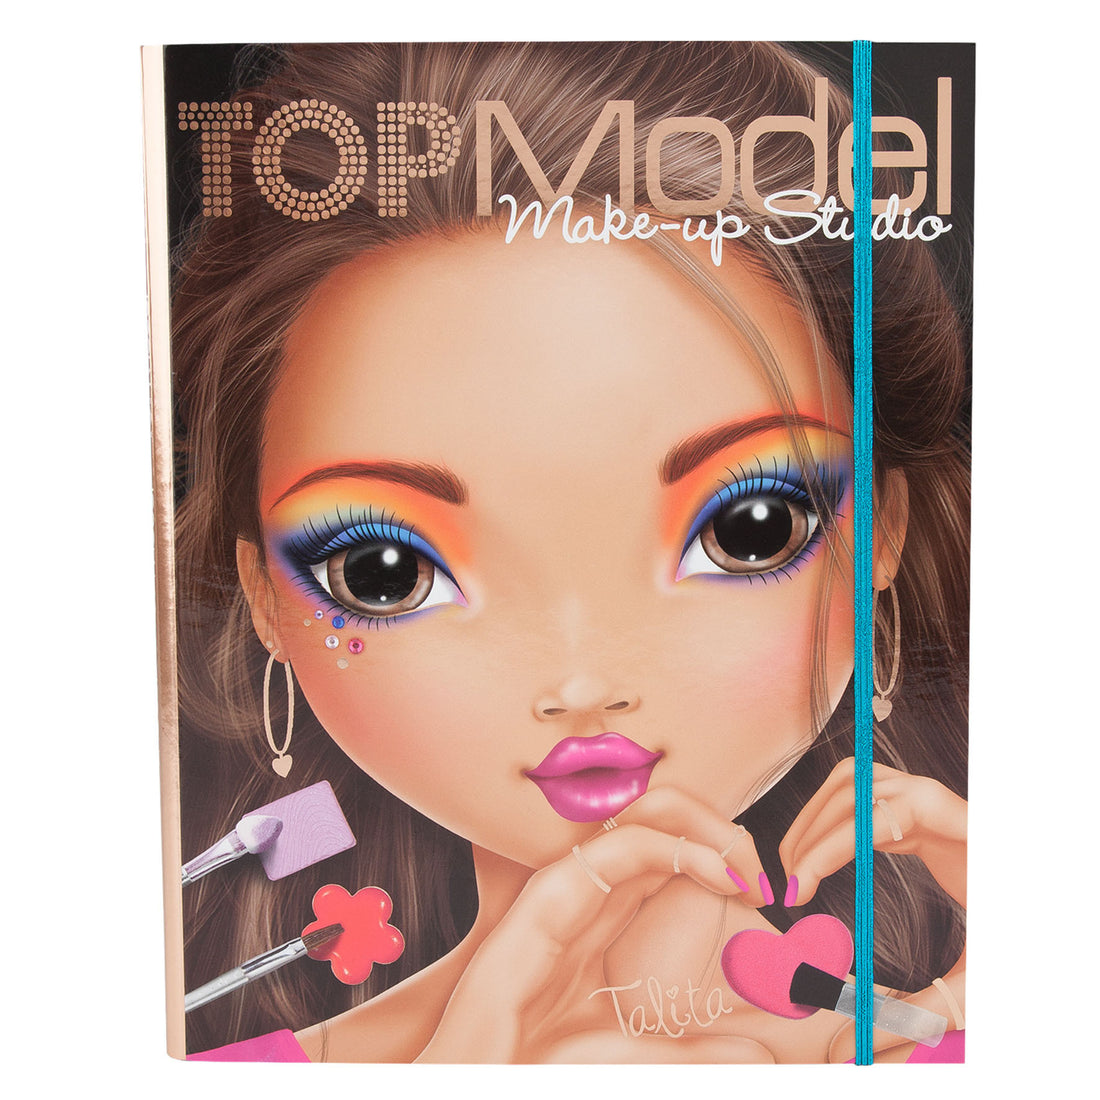 Depesche TOPModel Top Model Make-up Studio creative Folder set Kit